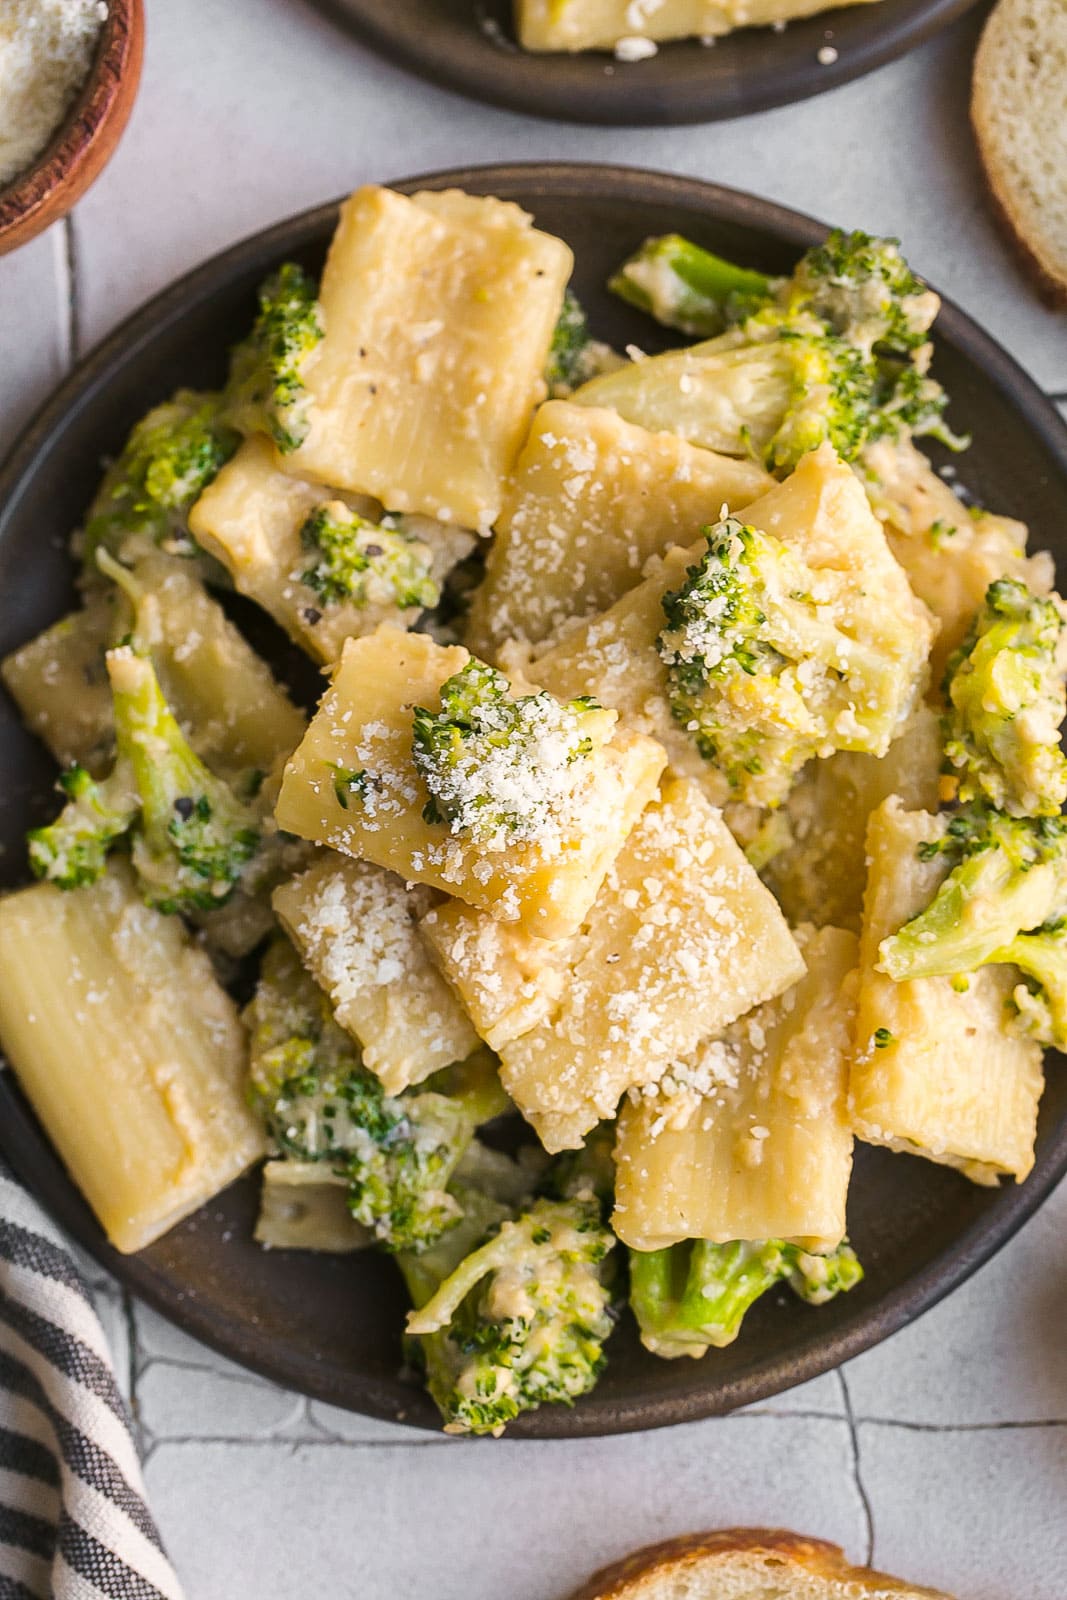 Cheesy pasta with broccoli.